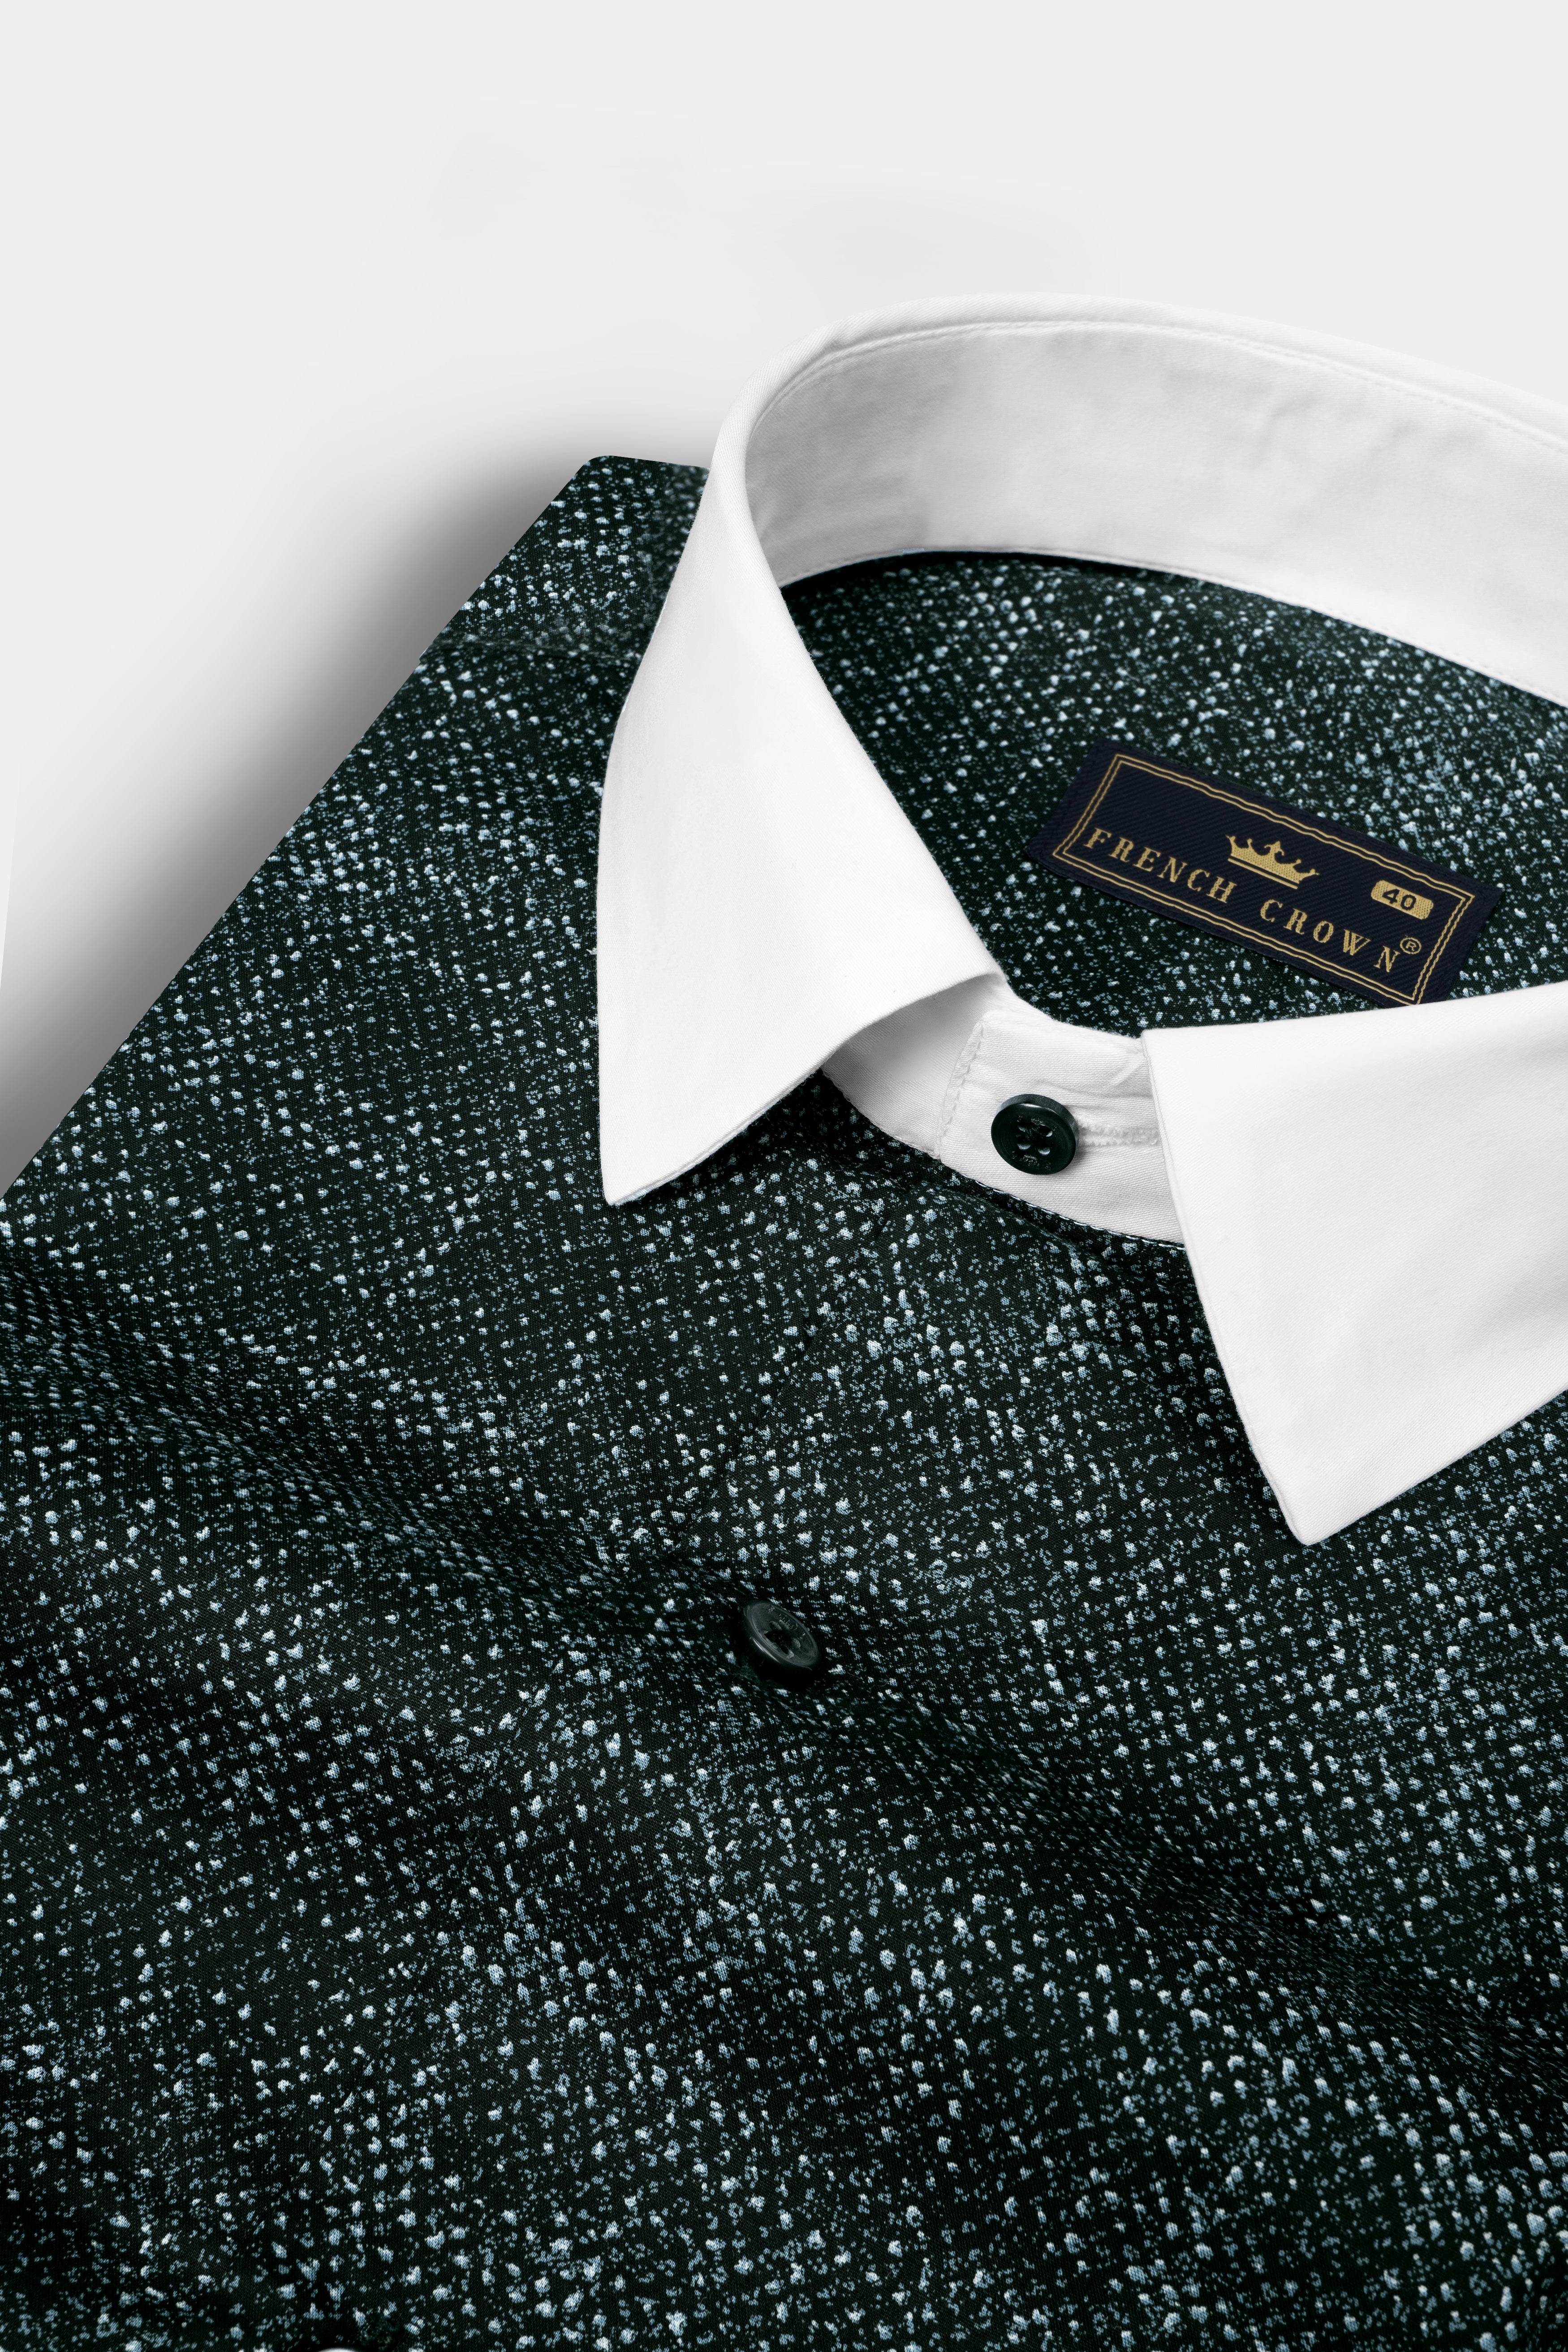 Swamp Green Textured Premium Cotton Shirt